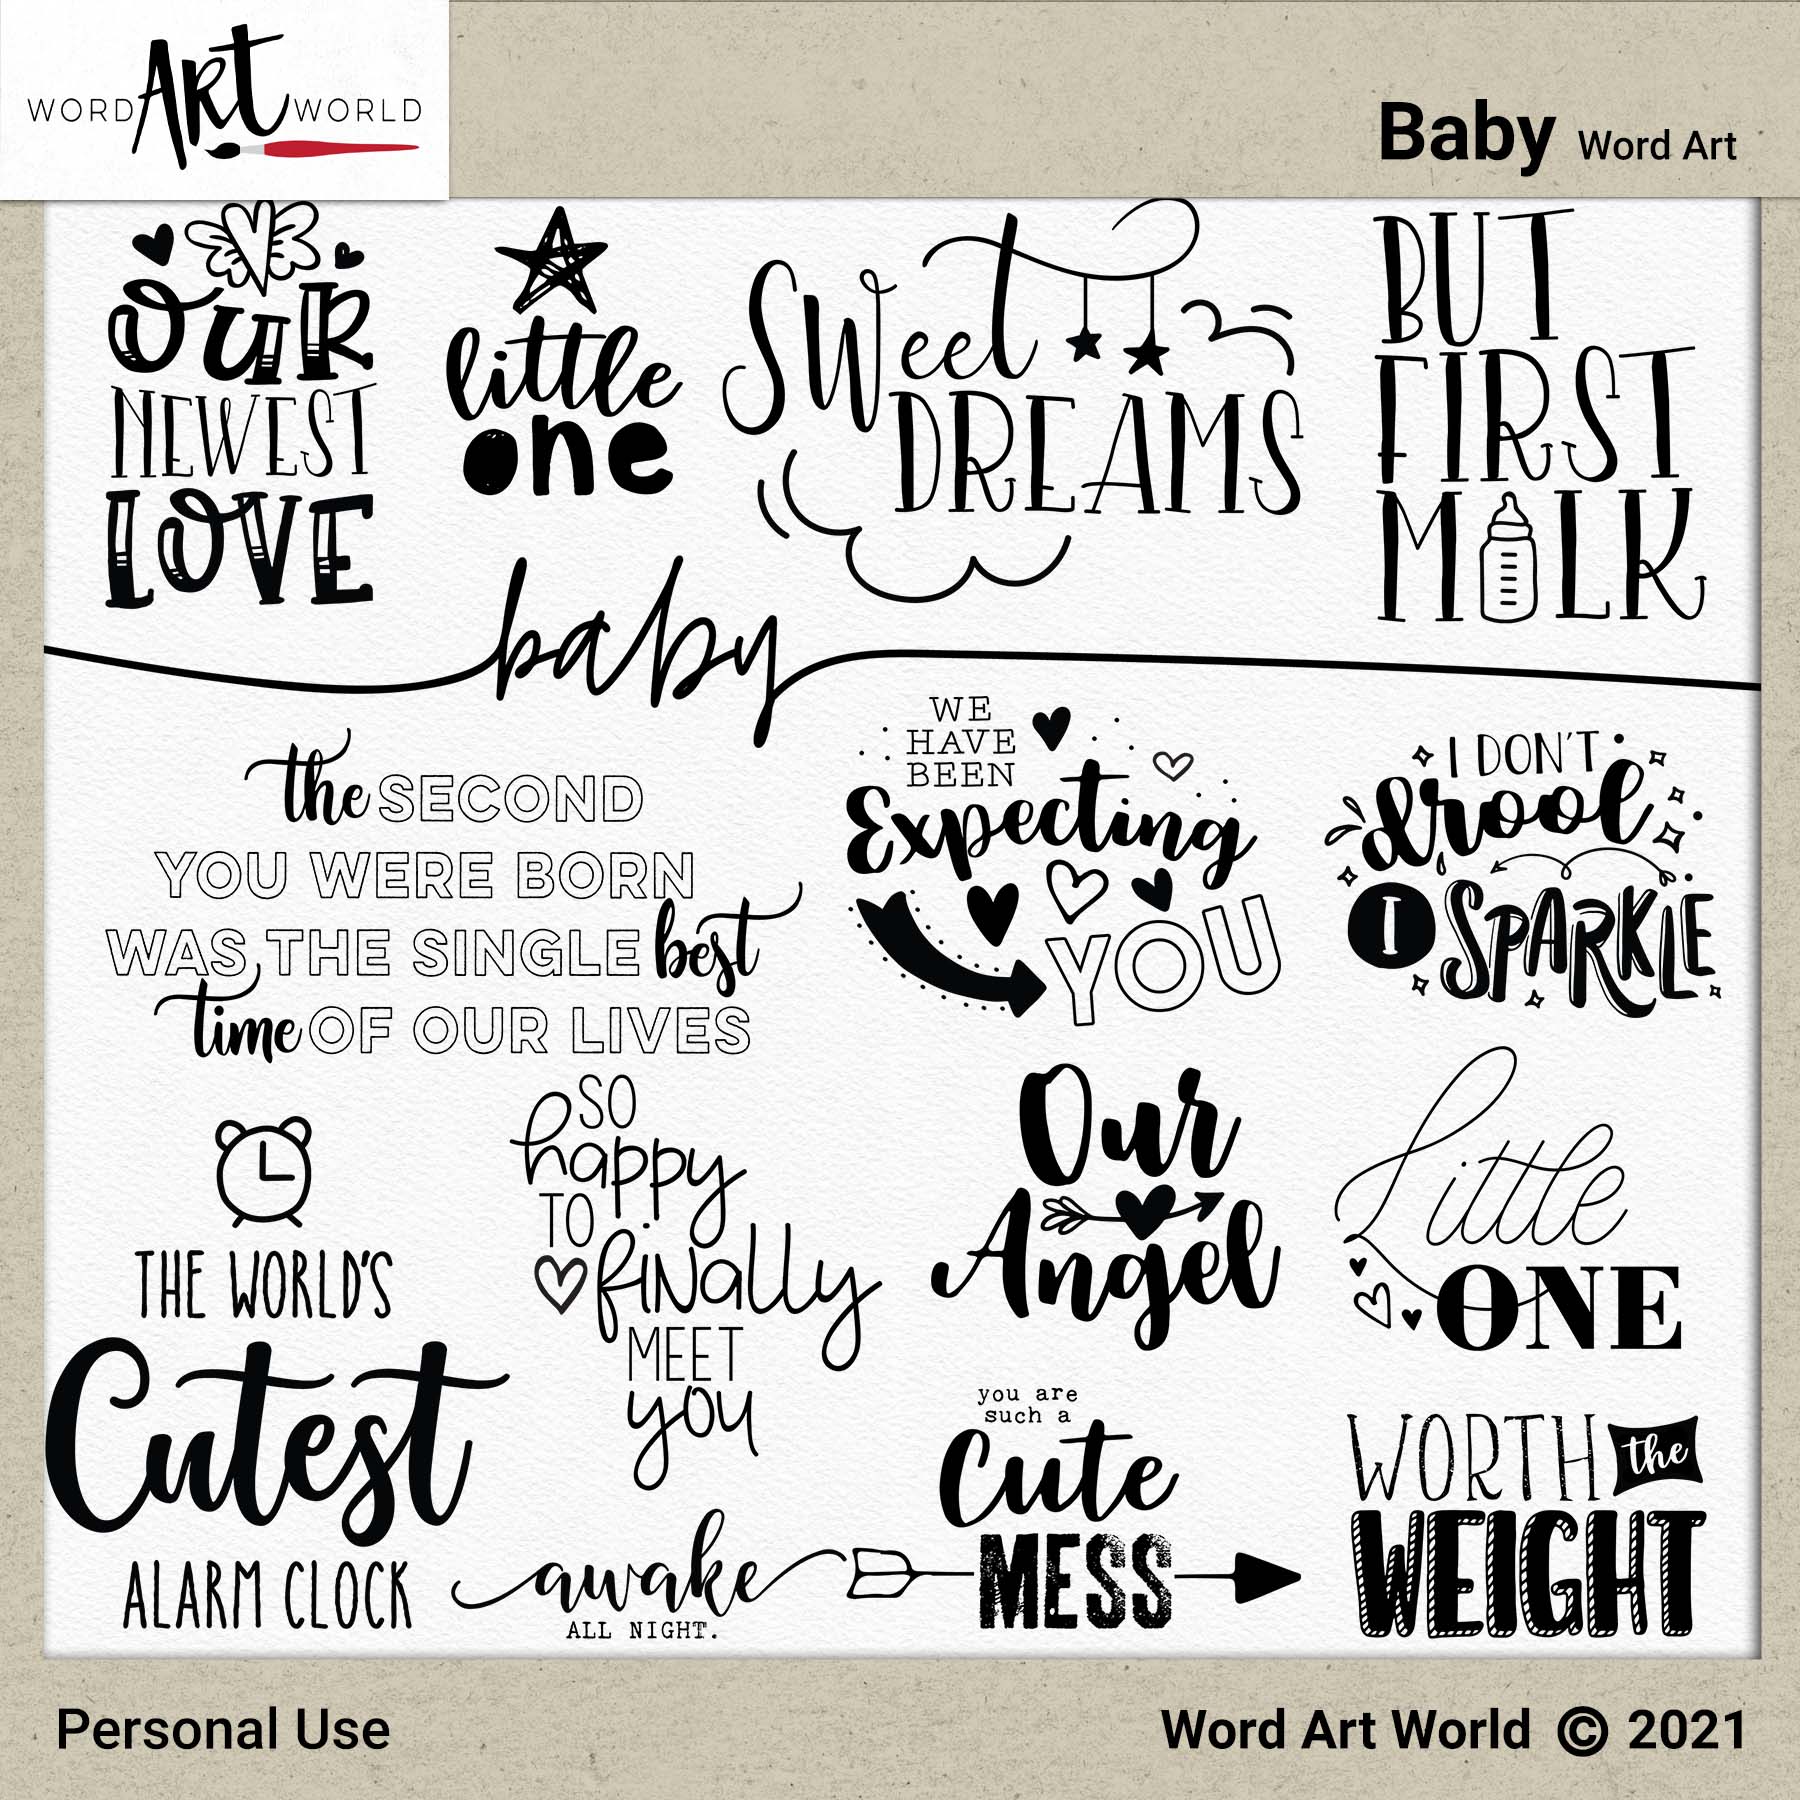 Baby Word Art